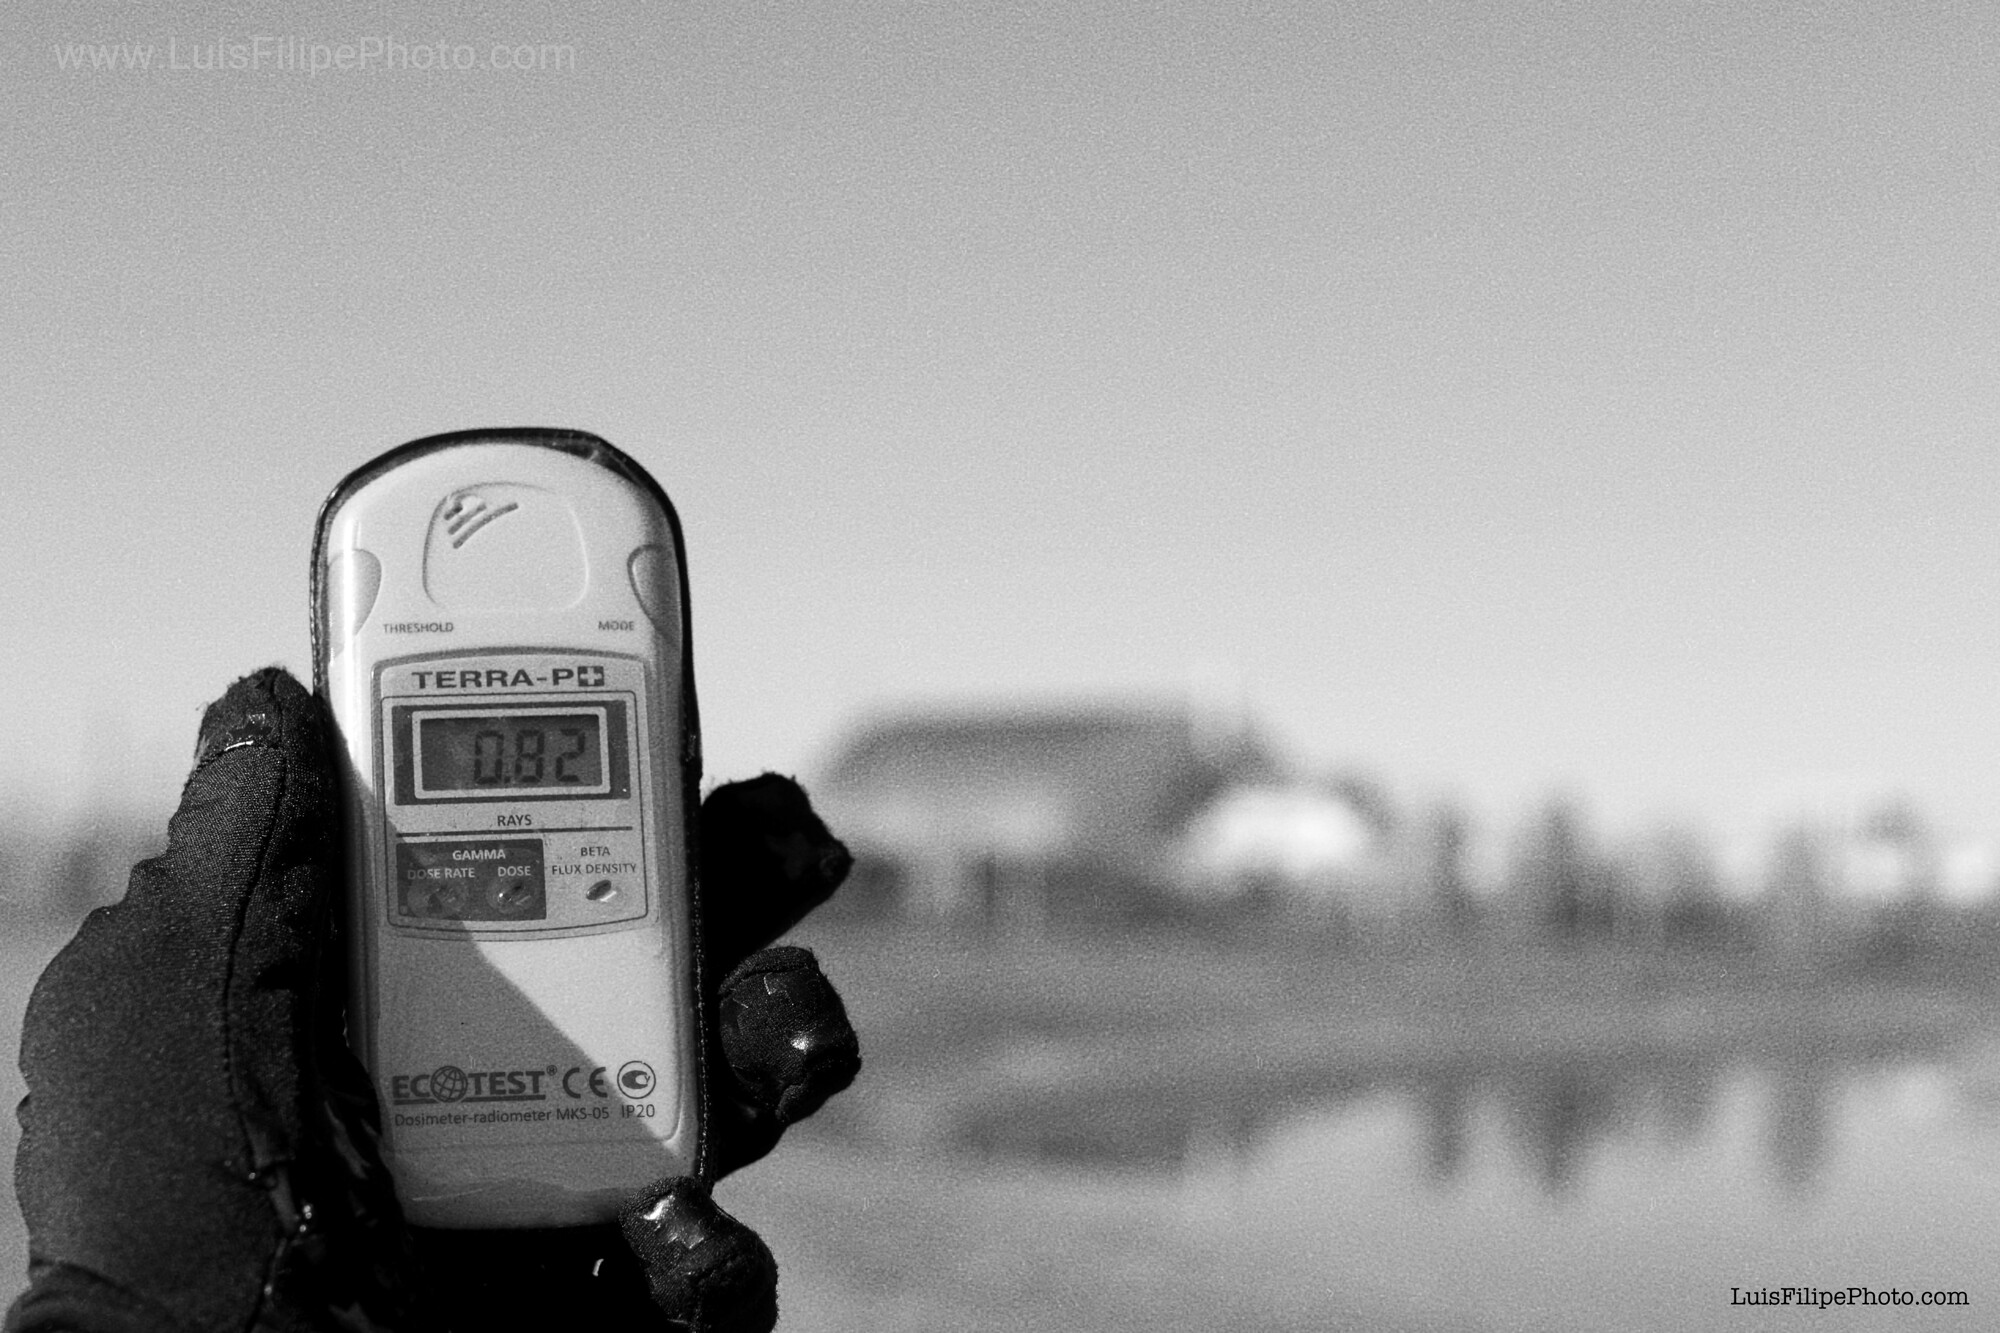 Chernobyl_Central_LuisFilipePhoto.com_gamma_bea_dosimeter_radiometer